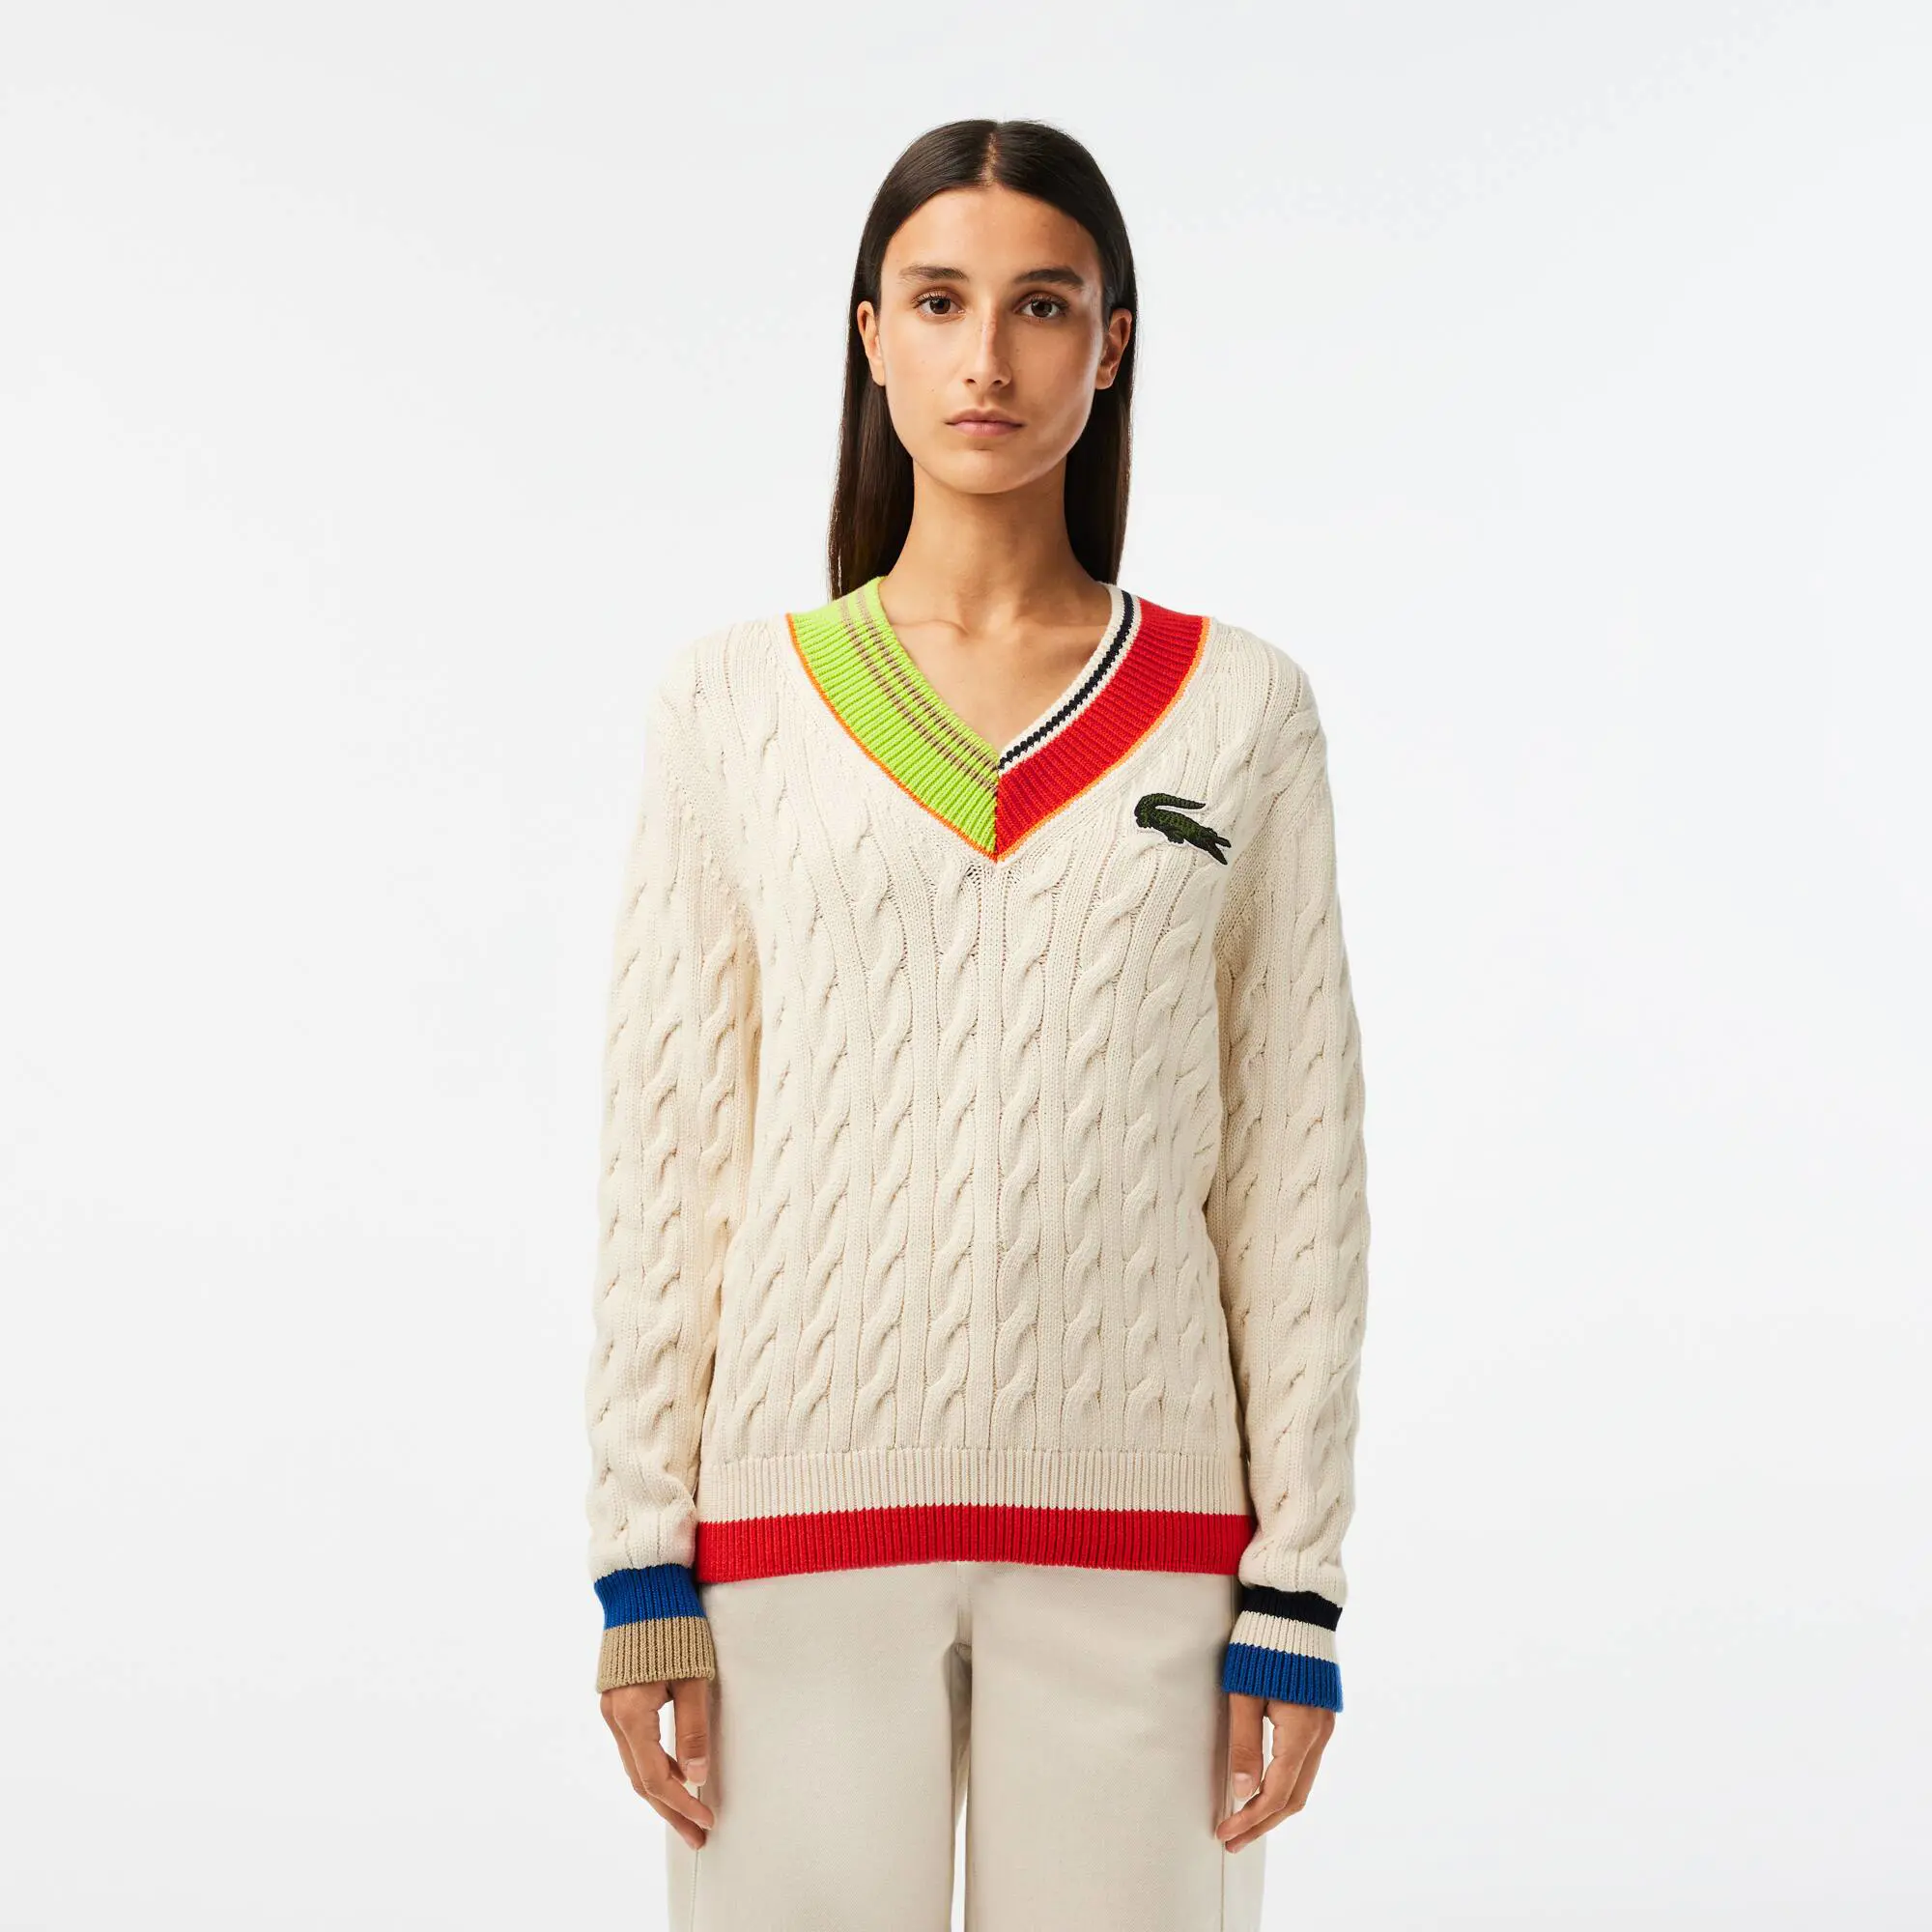 Lacoste Women’s Cable Knit Color Twist V-Neck Sweater. 1